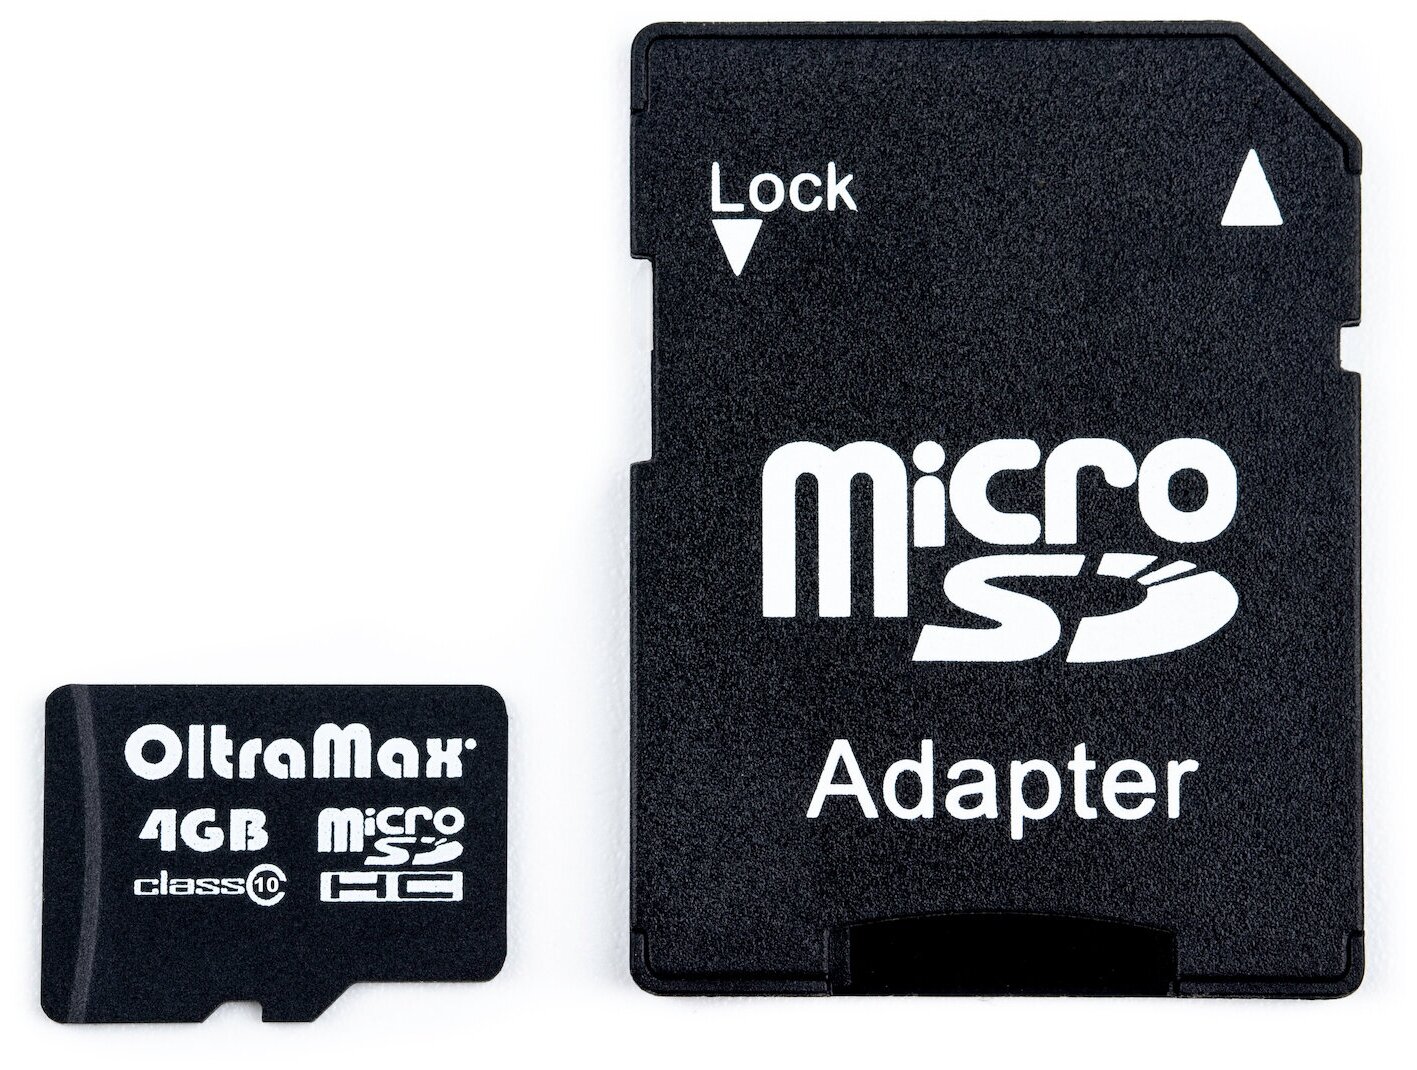 Карта памяти Oltramax MicroSDHC 4GB Class10 (+ адаптер SD)